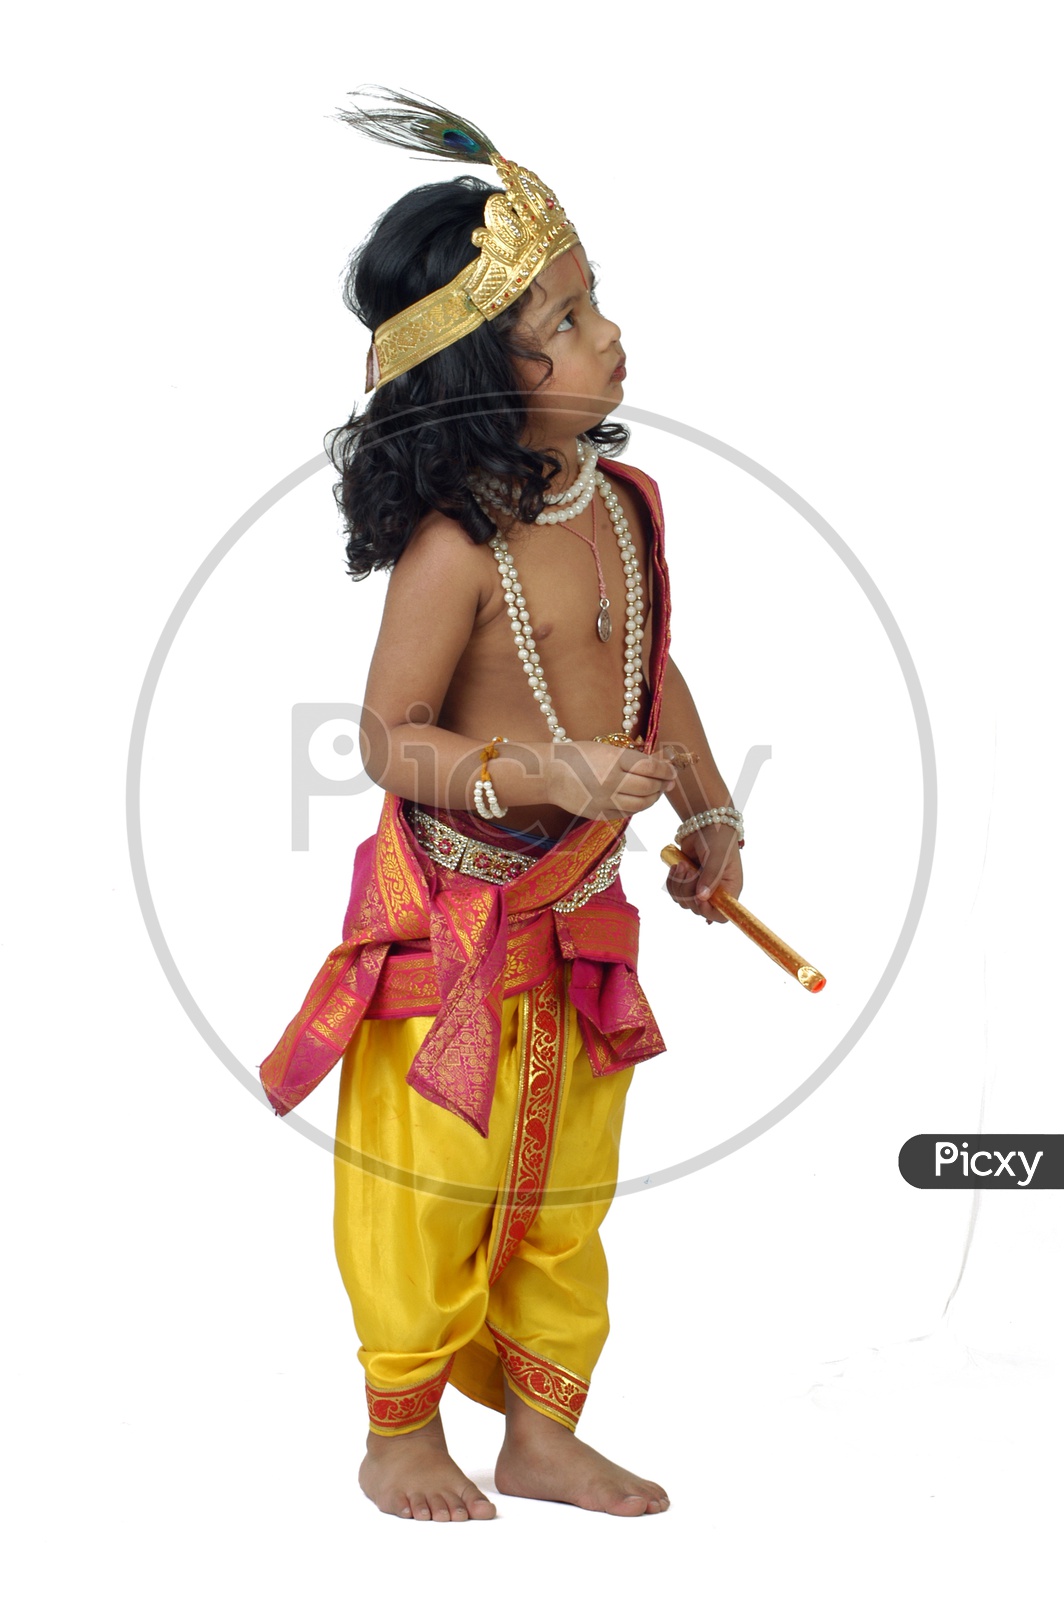 A little boy dressed up as Hindu God Krishna